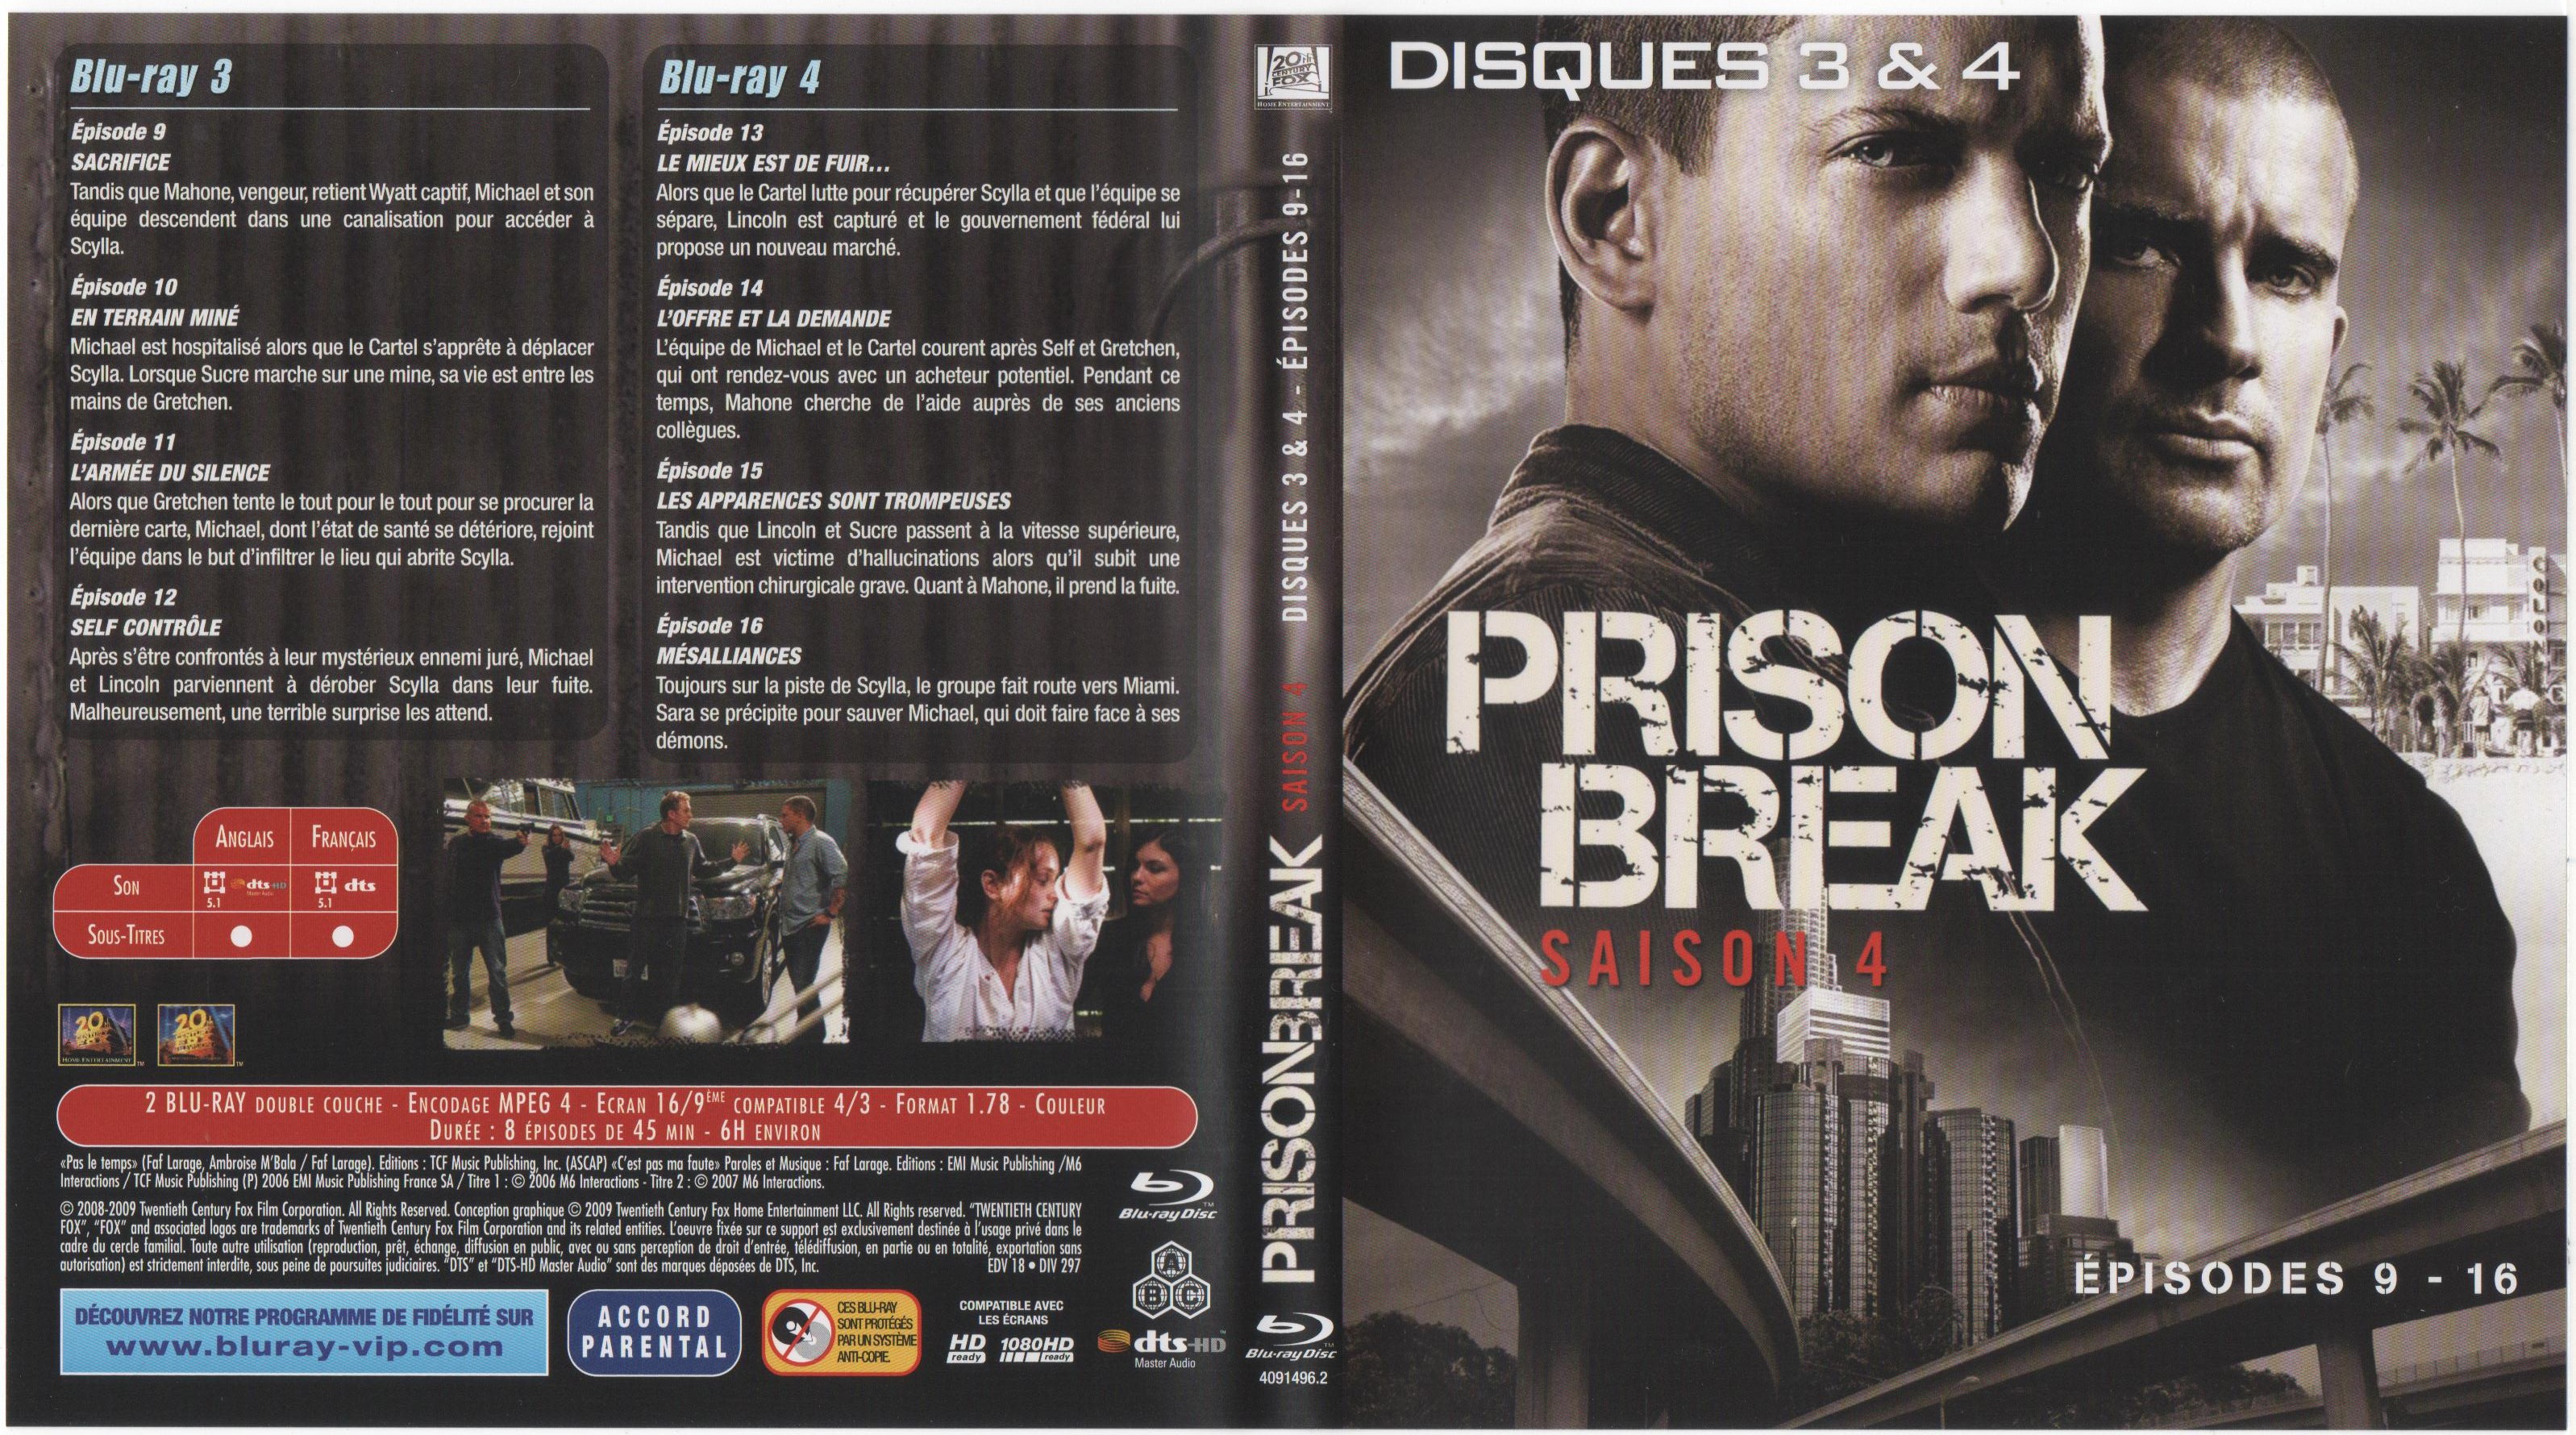 Jaquette DVD Prison break Saison 4 DVD 2 (BLU-RAY)